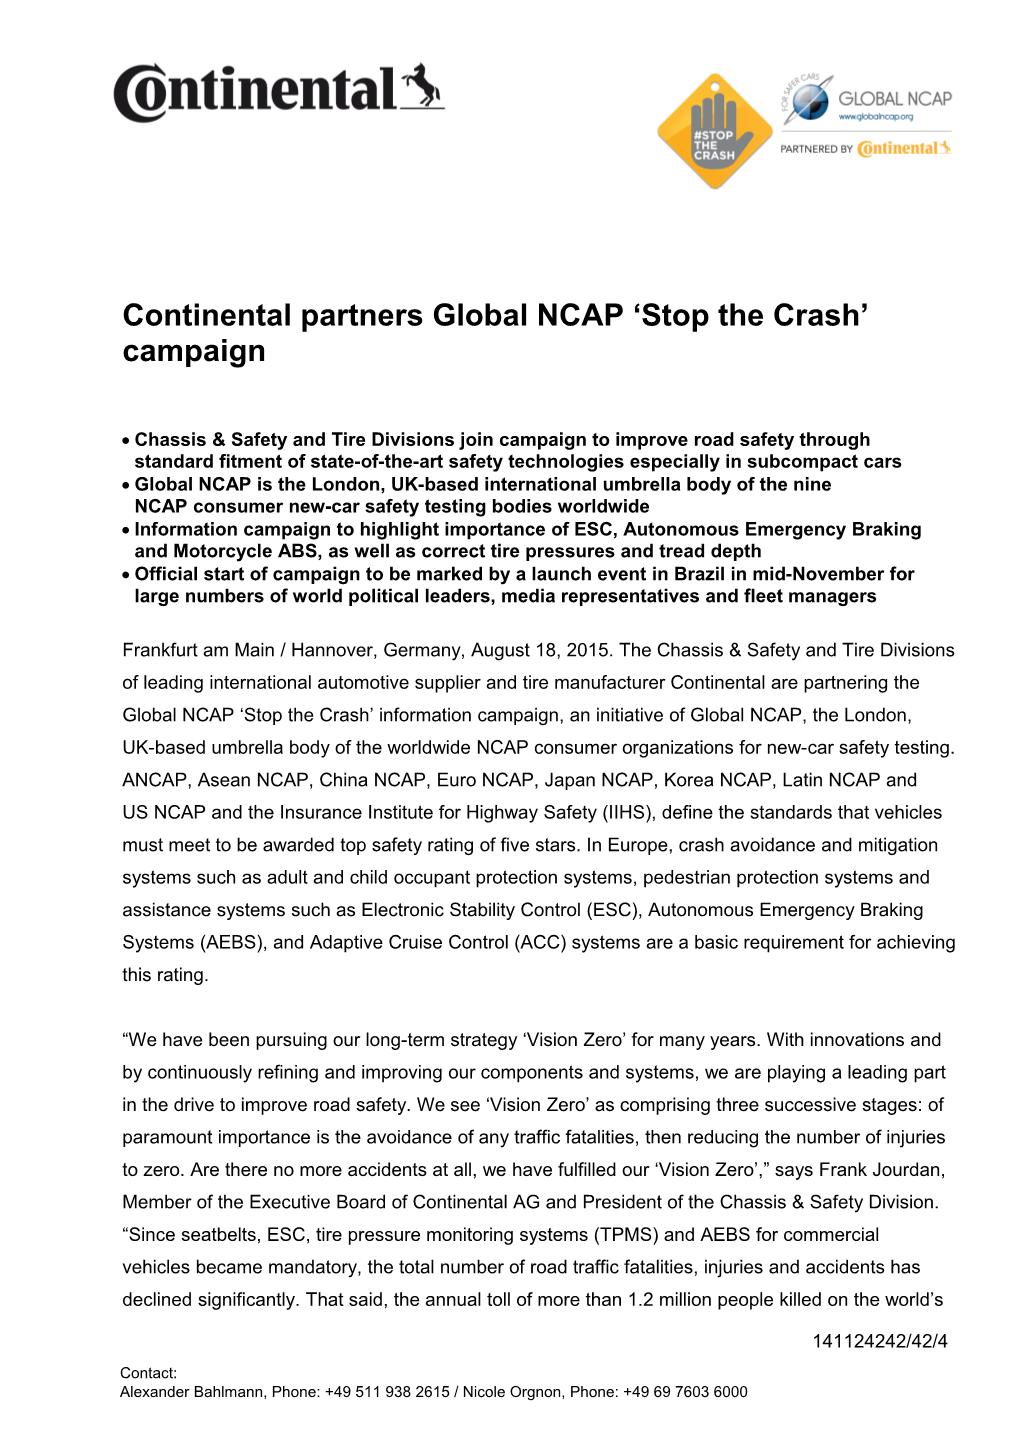 Continental Partners Global NCAP Stop the Crash Campaign